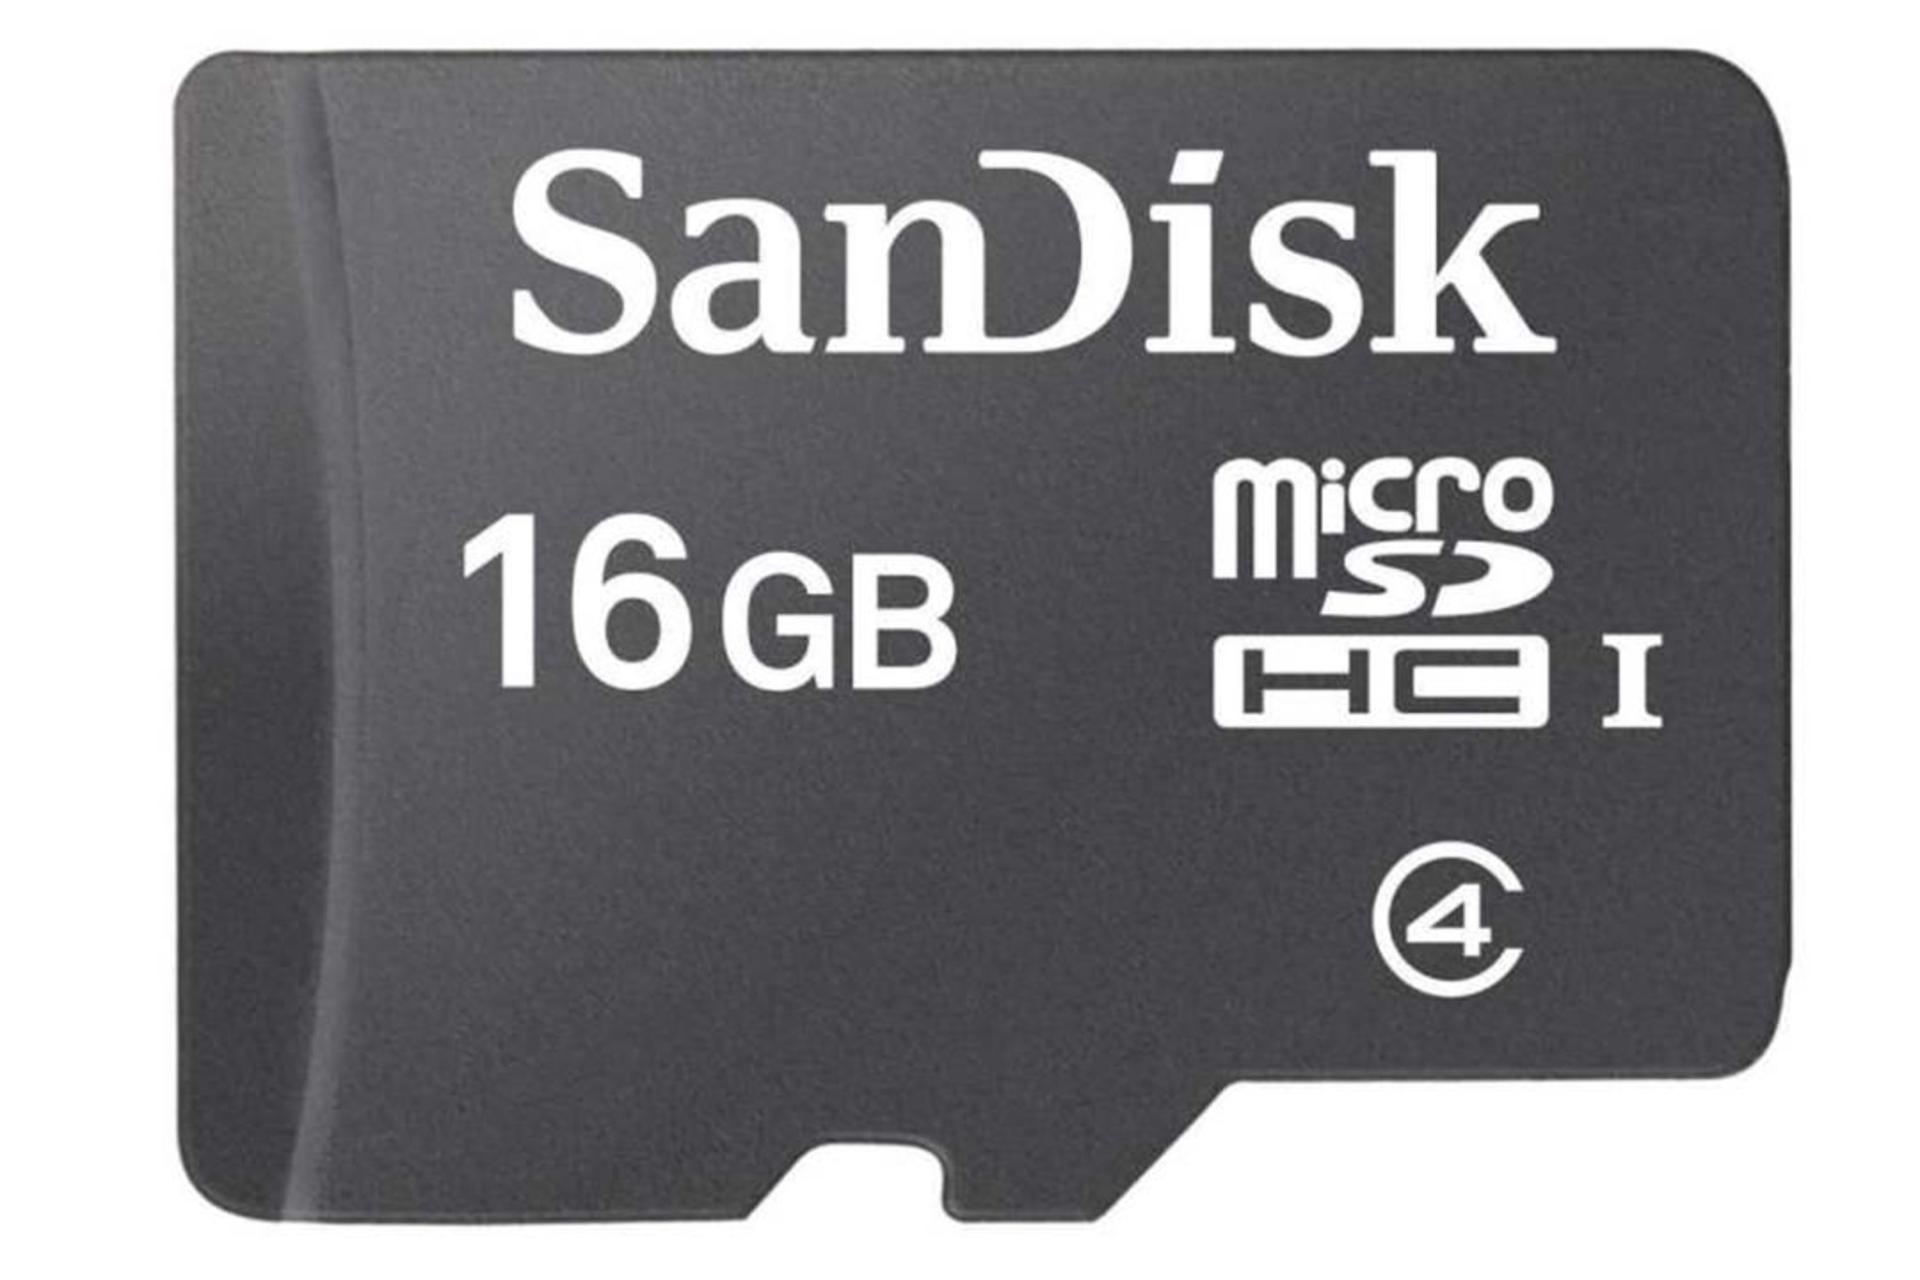 SanDisk MSD16 microSDHC Class 4 16GB